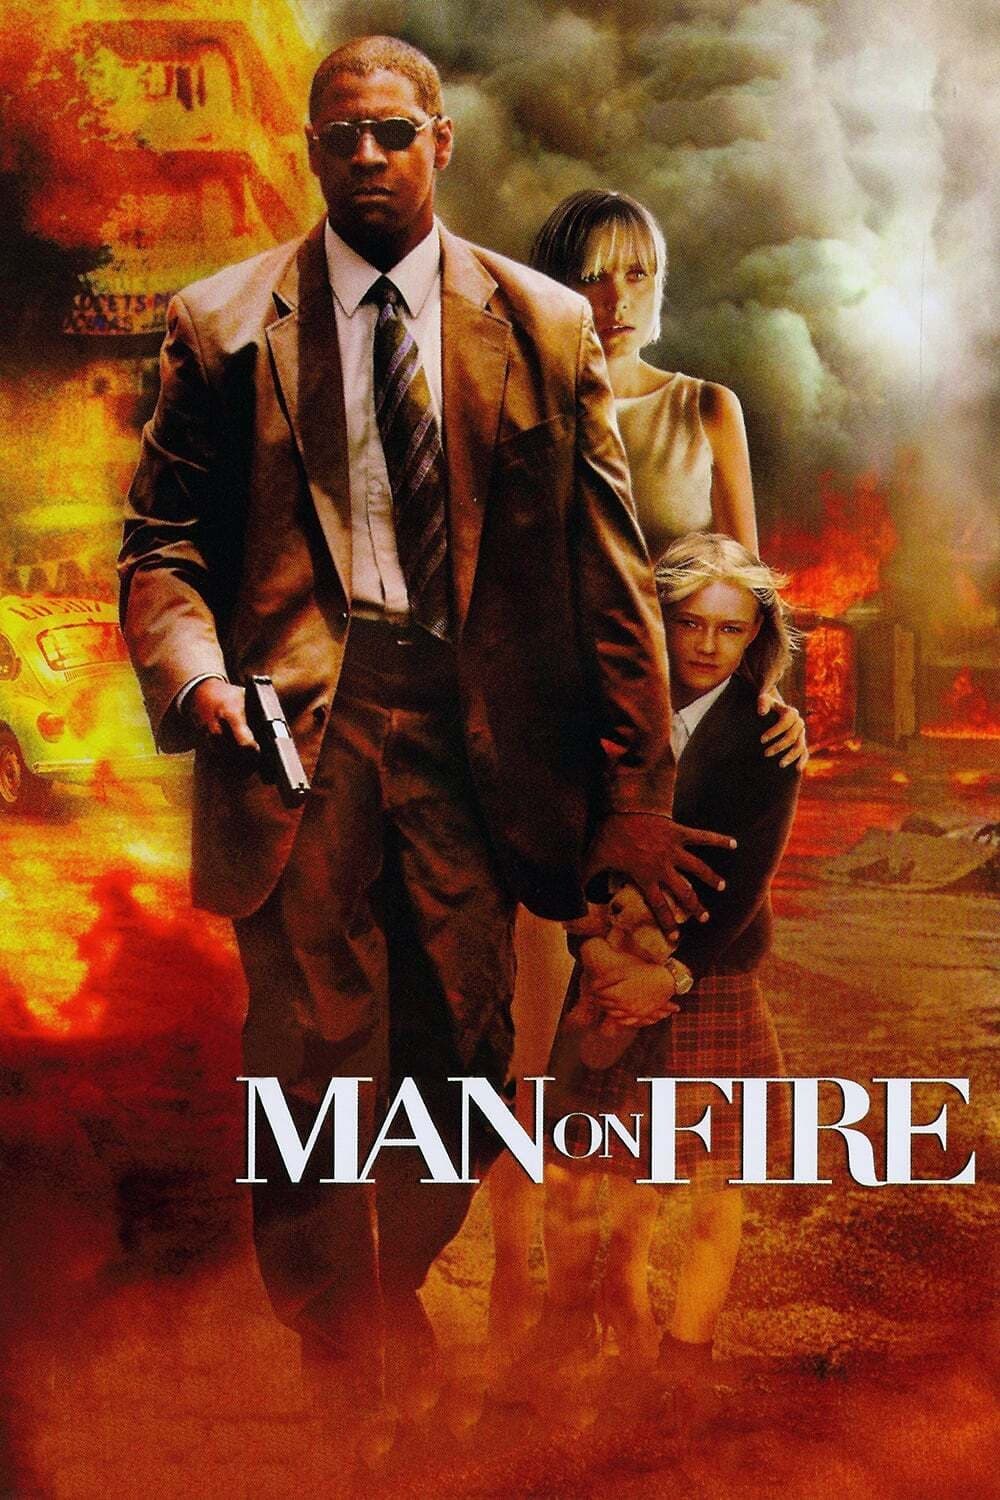 Stiahni si HD Filmy Muž v ohni / Man on Fire (2004)(CZ,EN)[1080p] = CSFD 81%